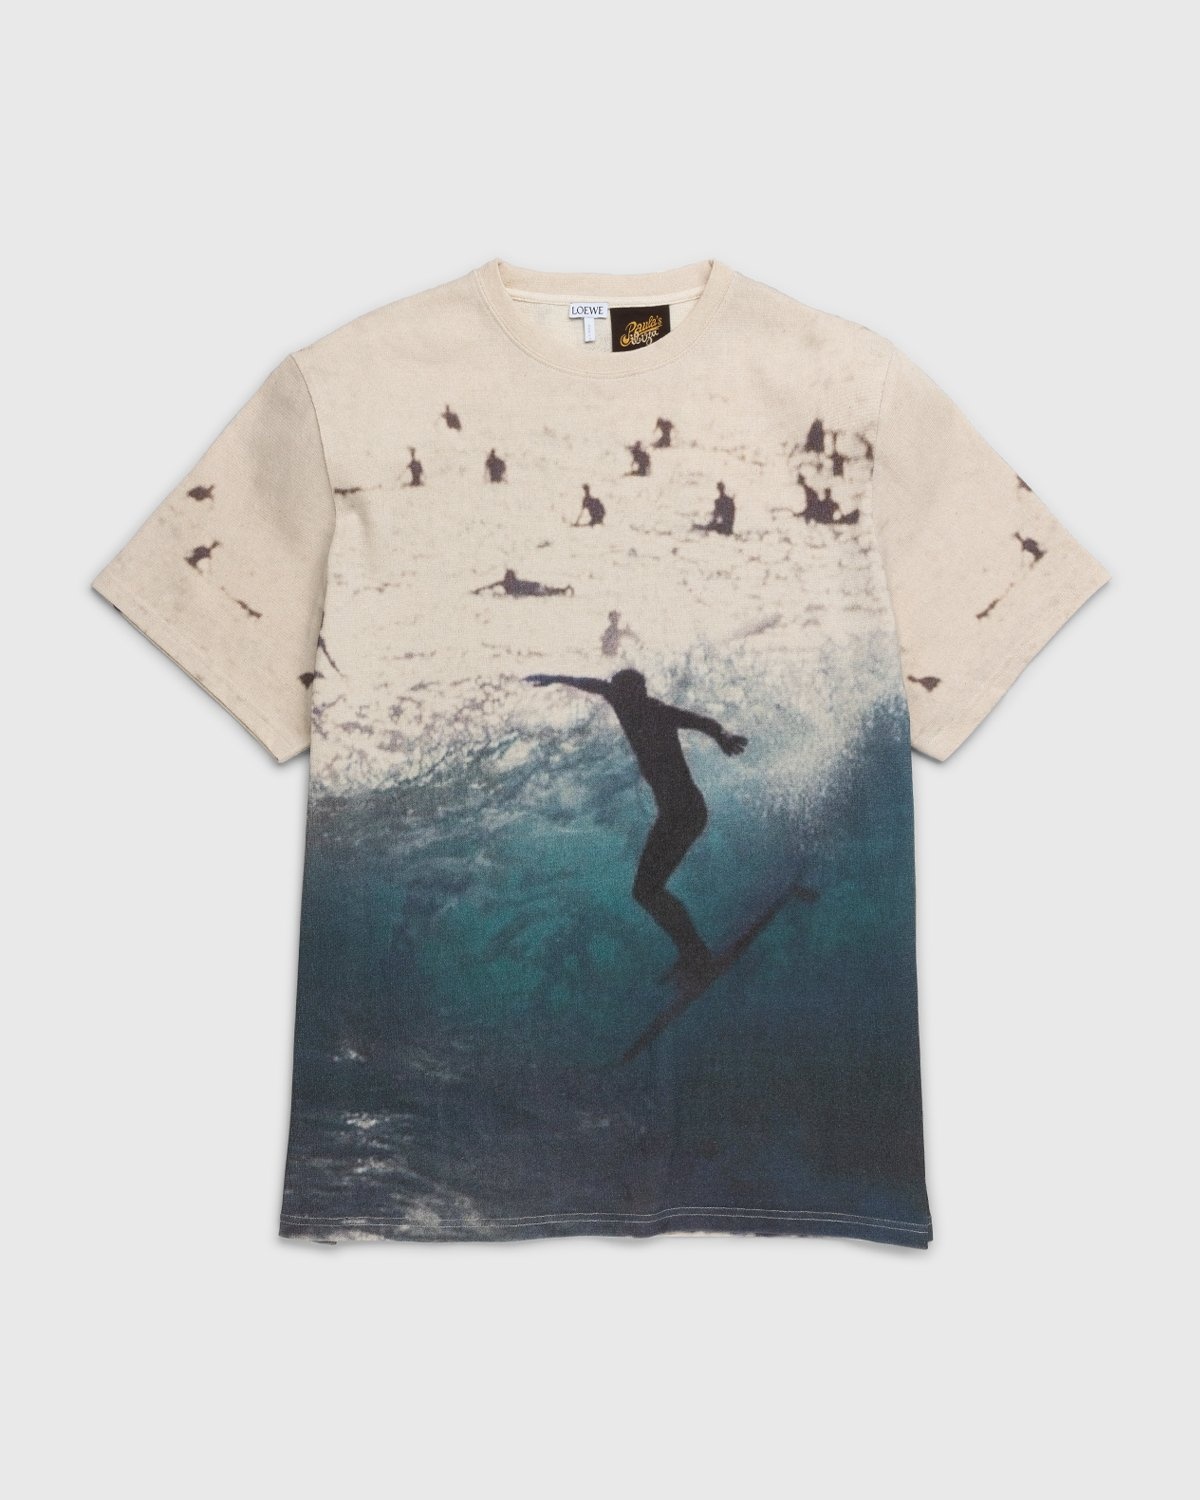 Loewe – Paula's Ibiza Surf Print T-Shirt Ecru/Navy Blue - T-Shirts - Multi - Image 1